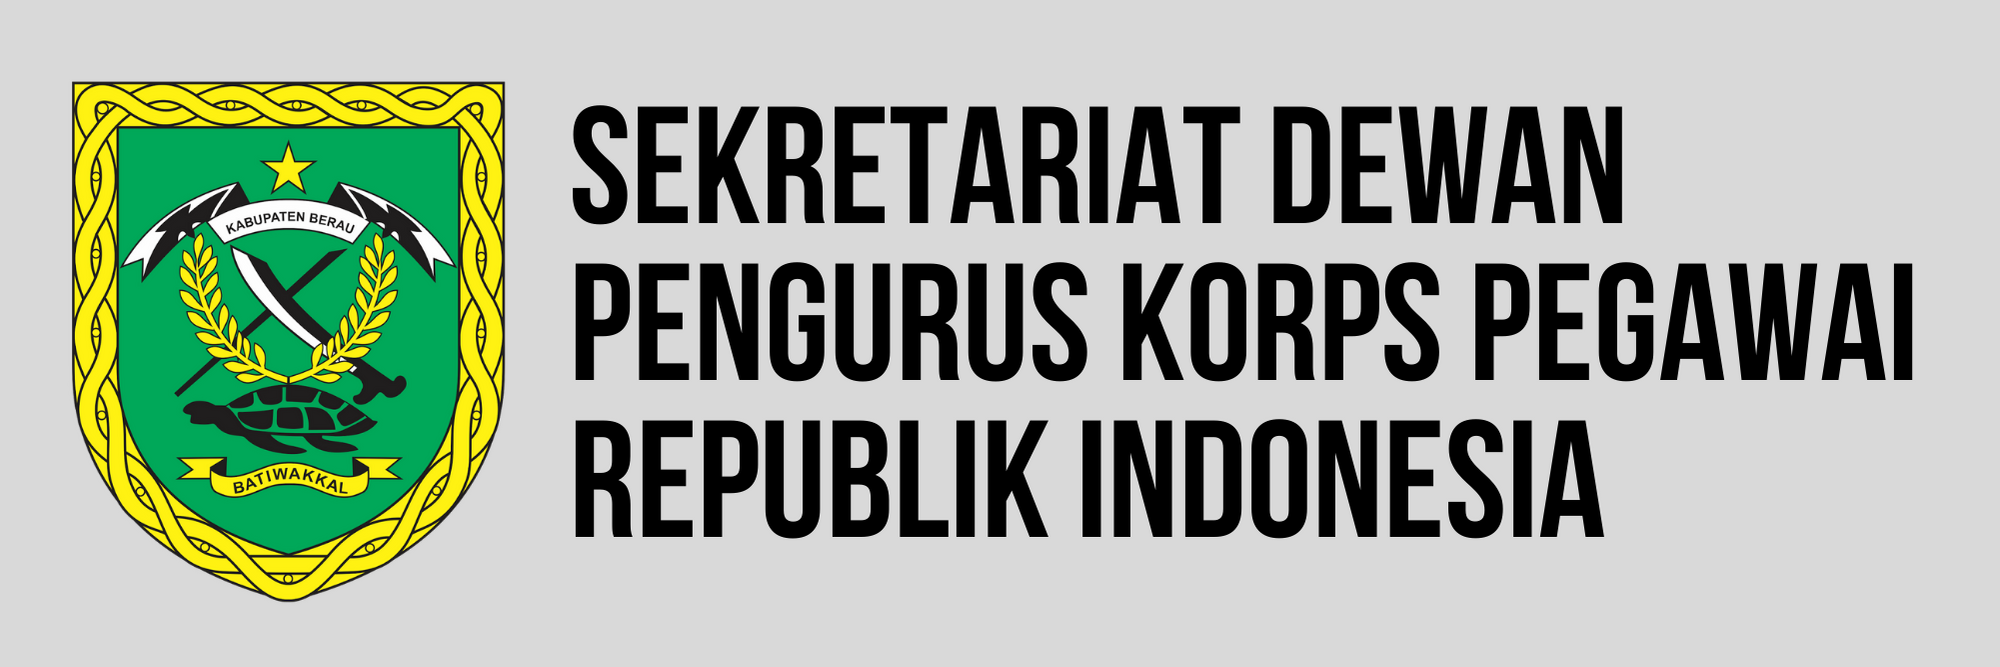 sekretariat dewan pengurus korps pegawai republik indonesia